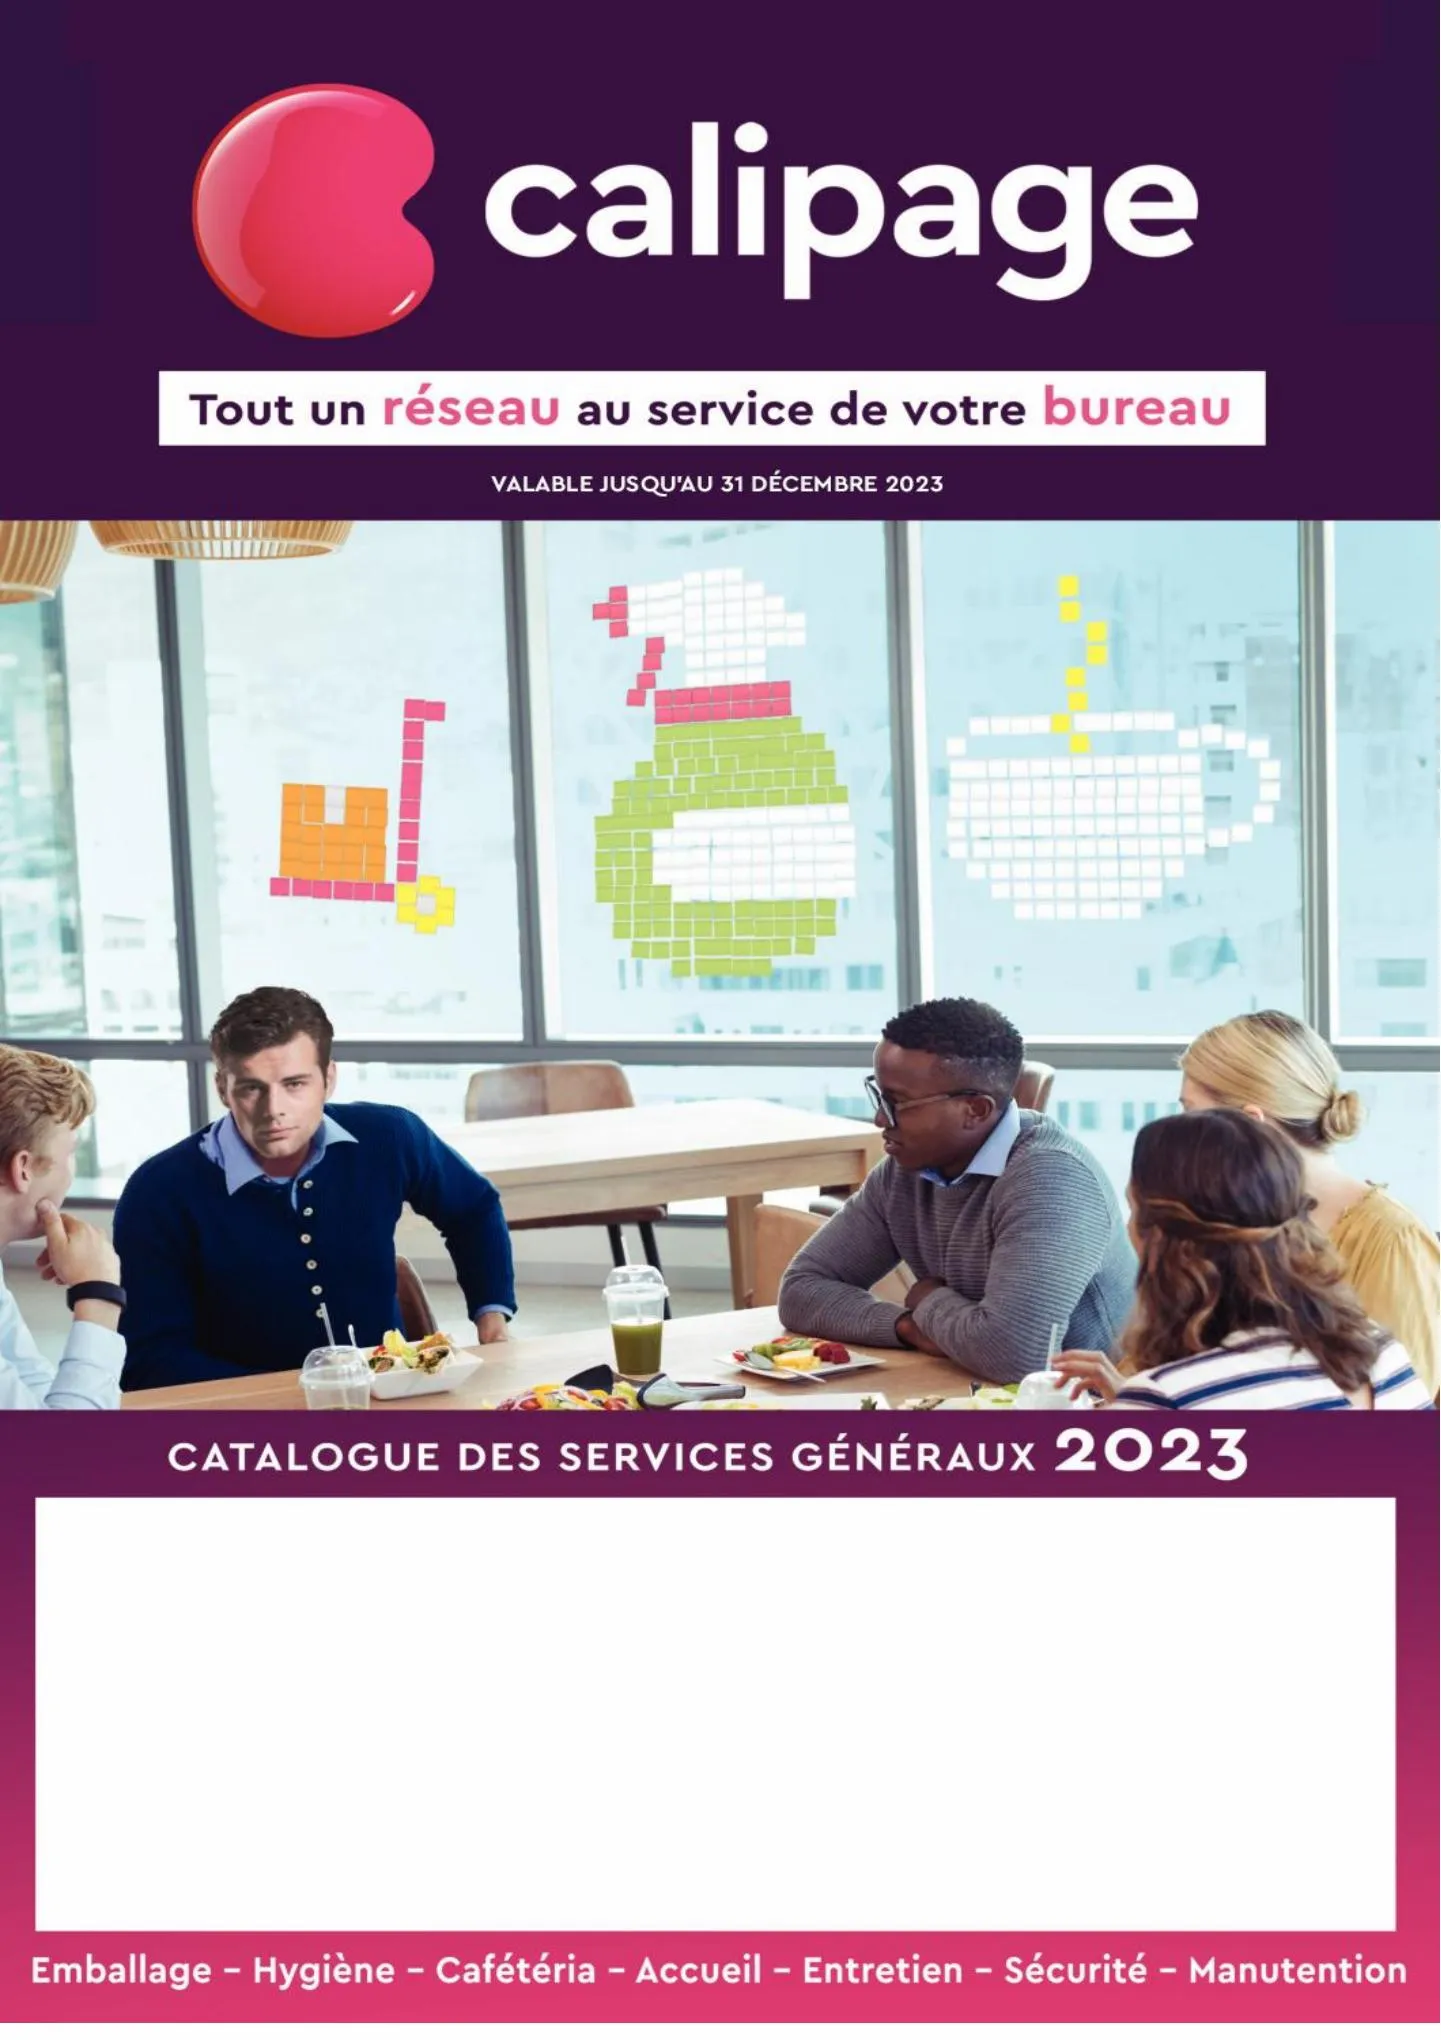 Catalogue Catalogue Services Generaux 2023 Calipage, page 00001